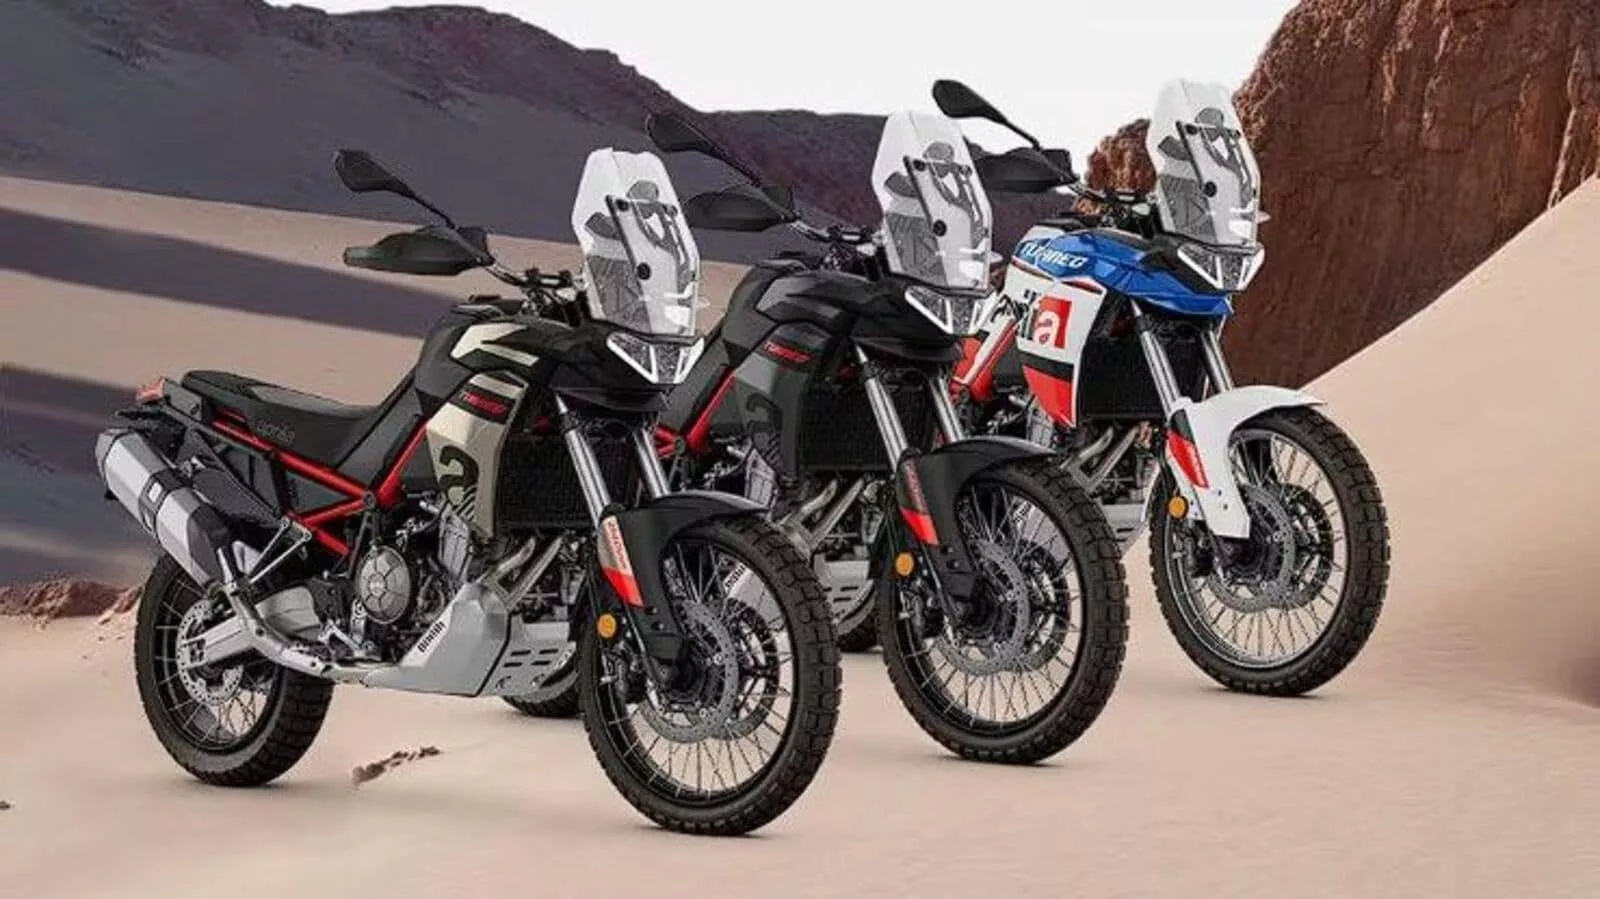 Aprilia Tuareg 660 prices revealed ahead of official launch